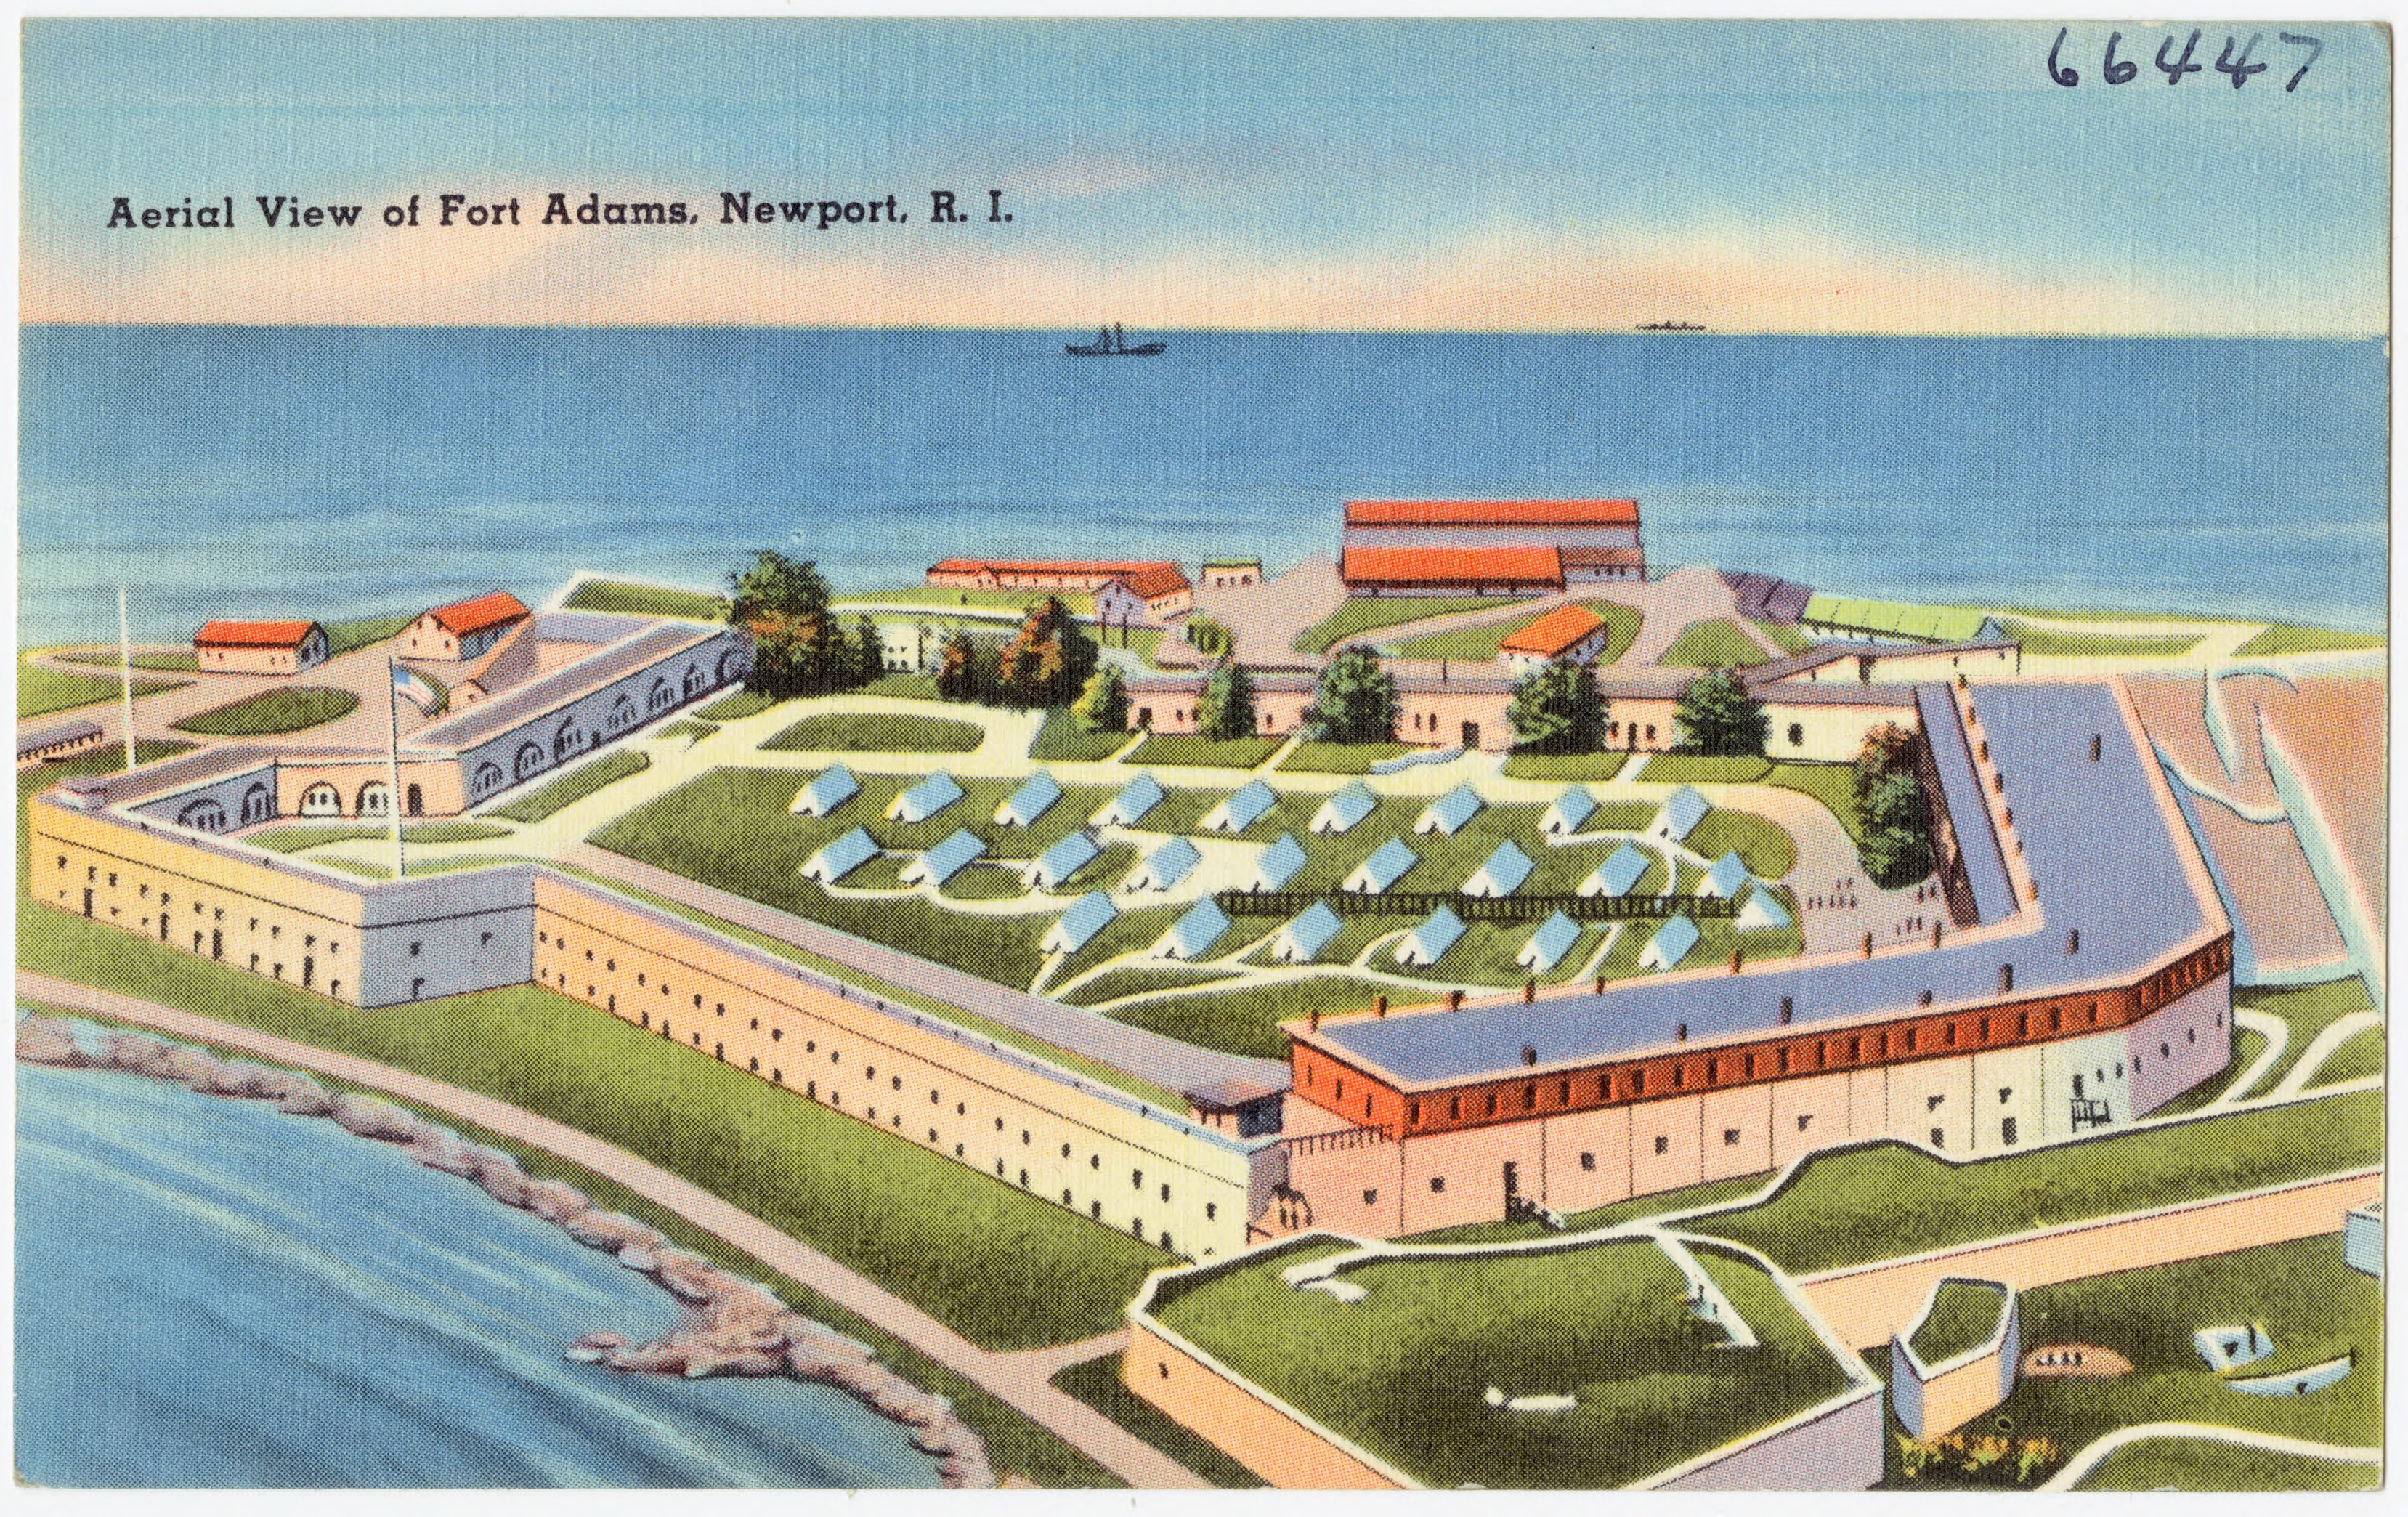 File:Aerial view of Fort Adams, Newport, R.I (66447).jpg - Wikimedia ...